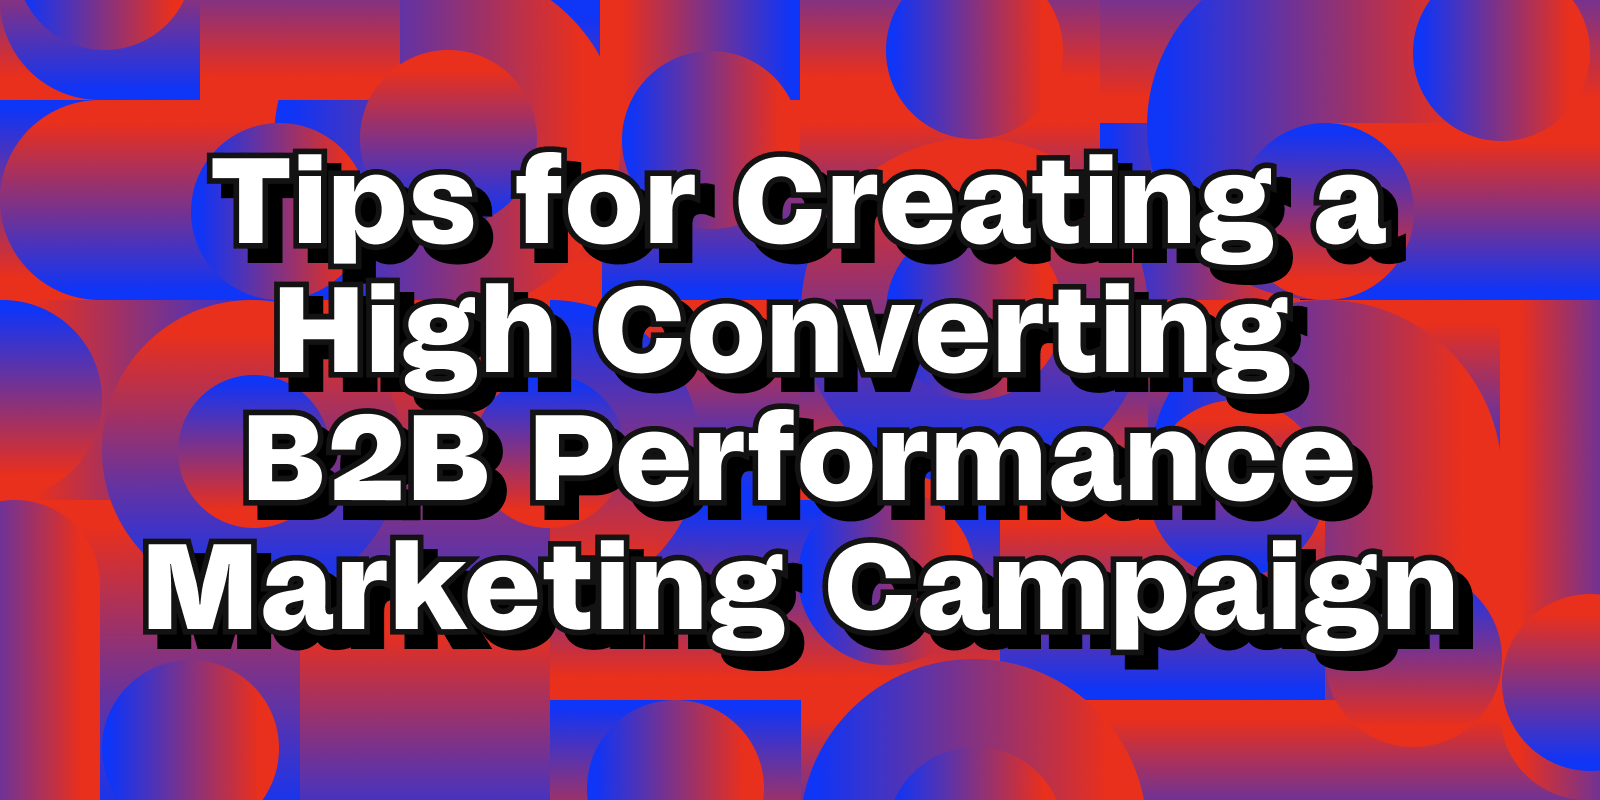 B2B performance marketing campaign